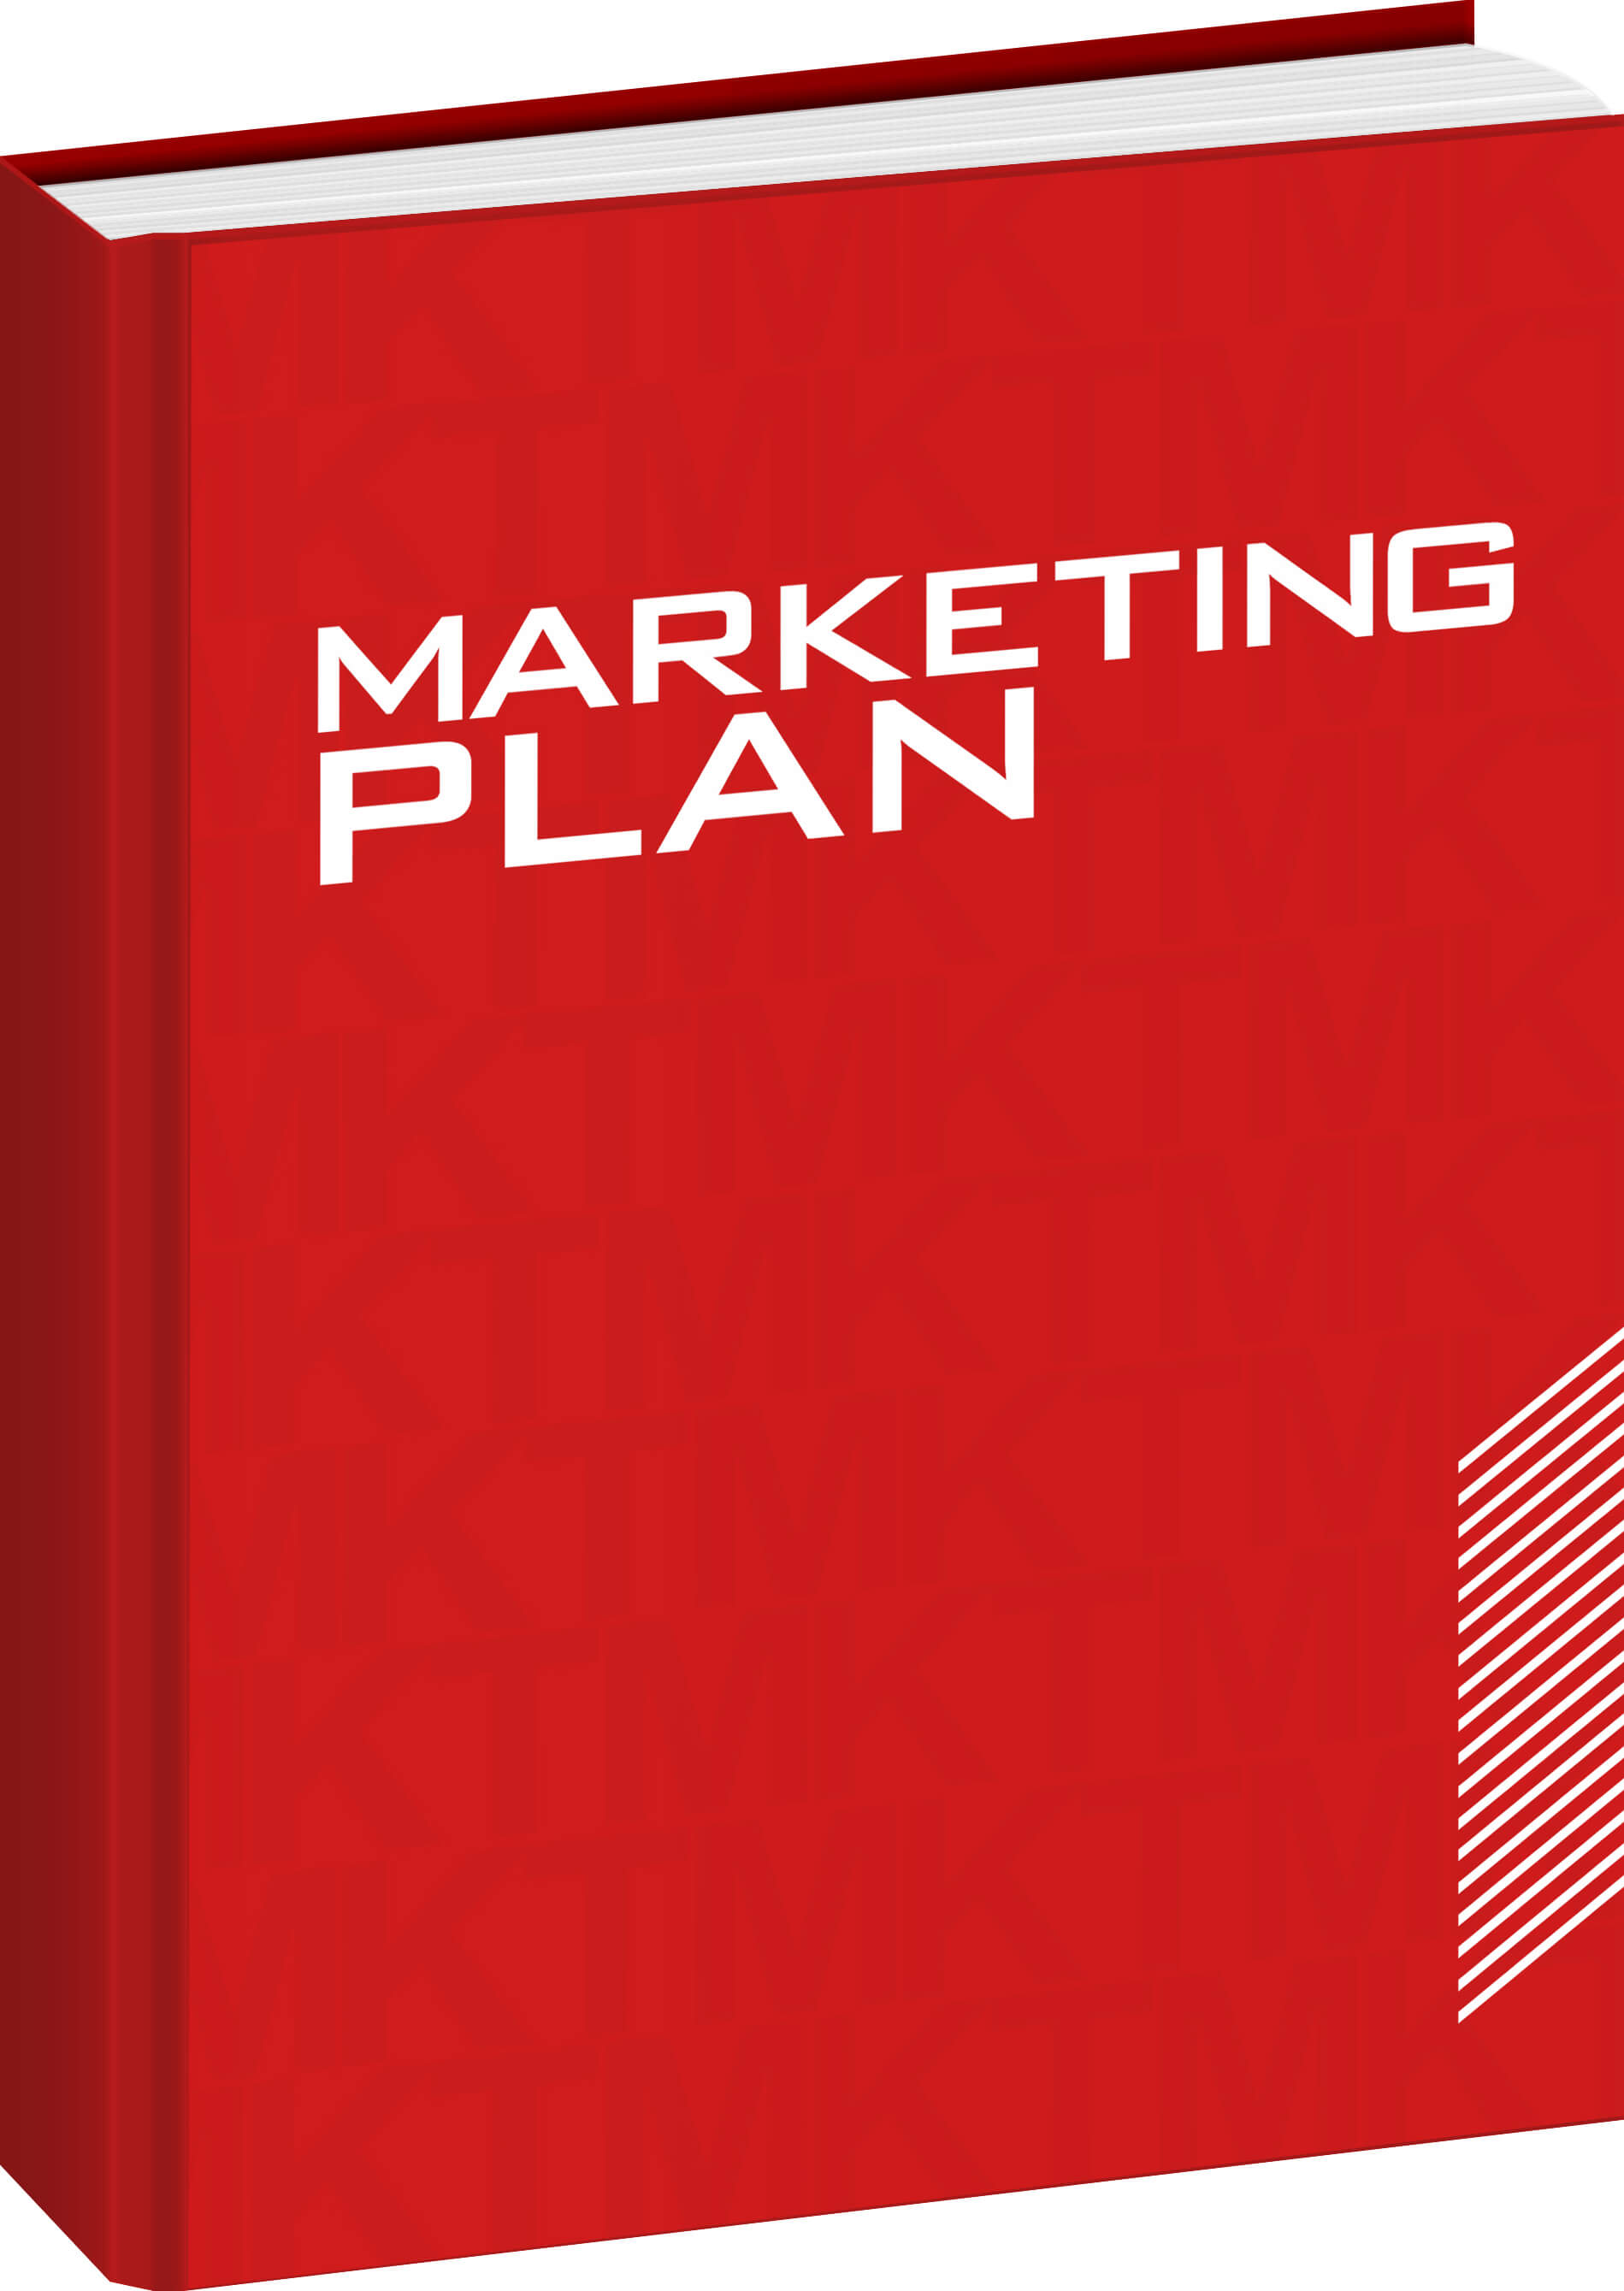 BBSA Marketing Strategy and Plan